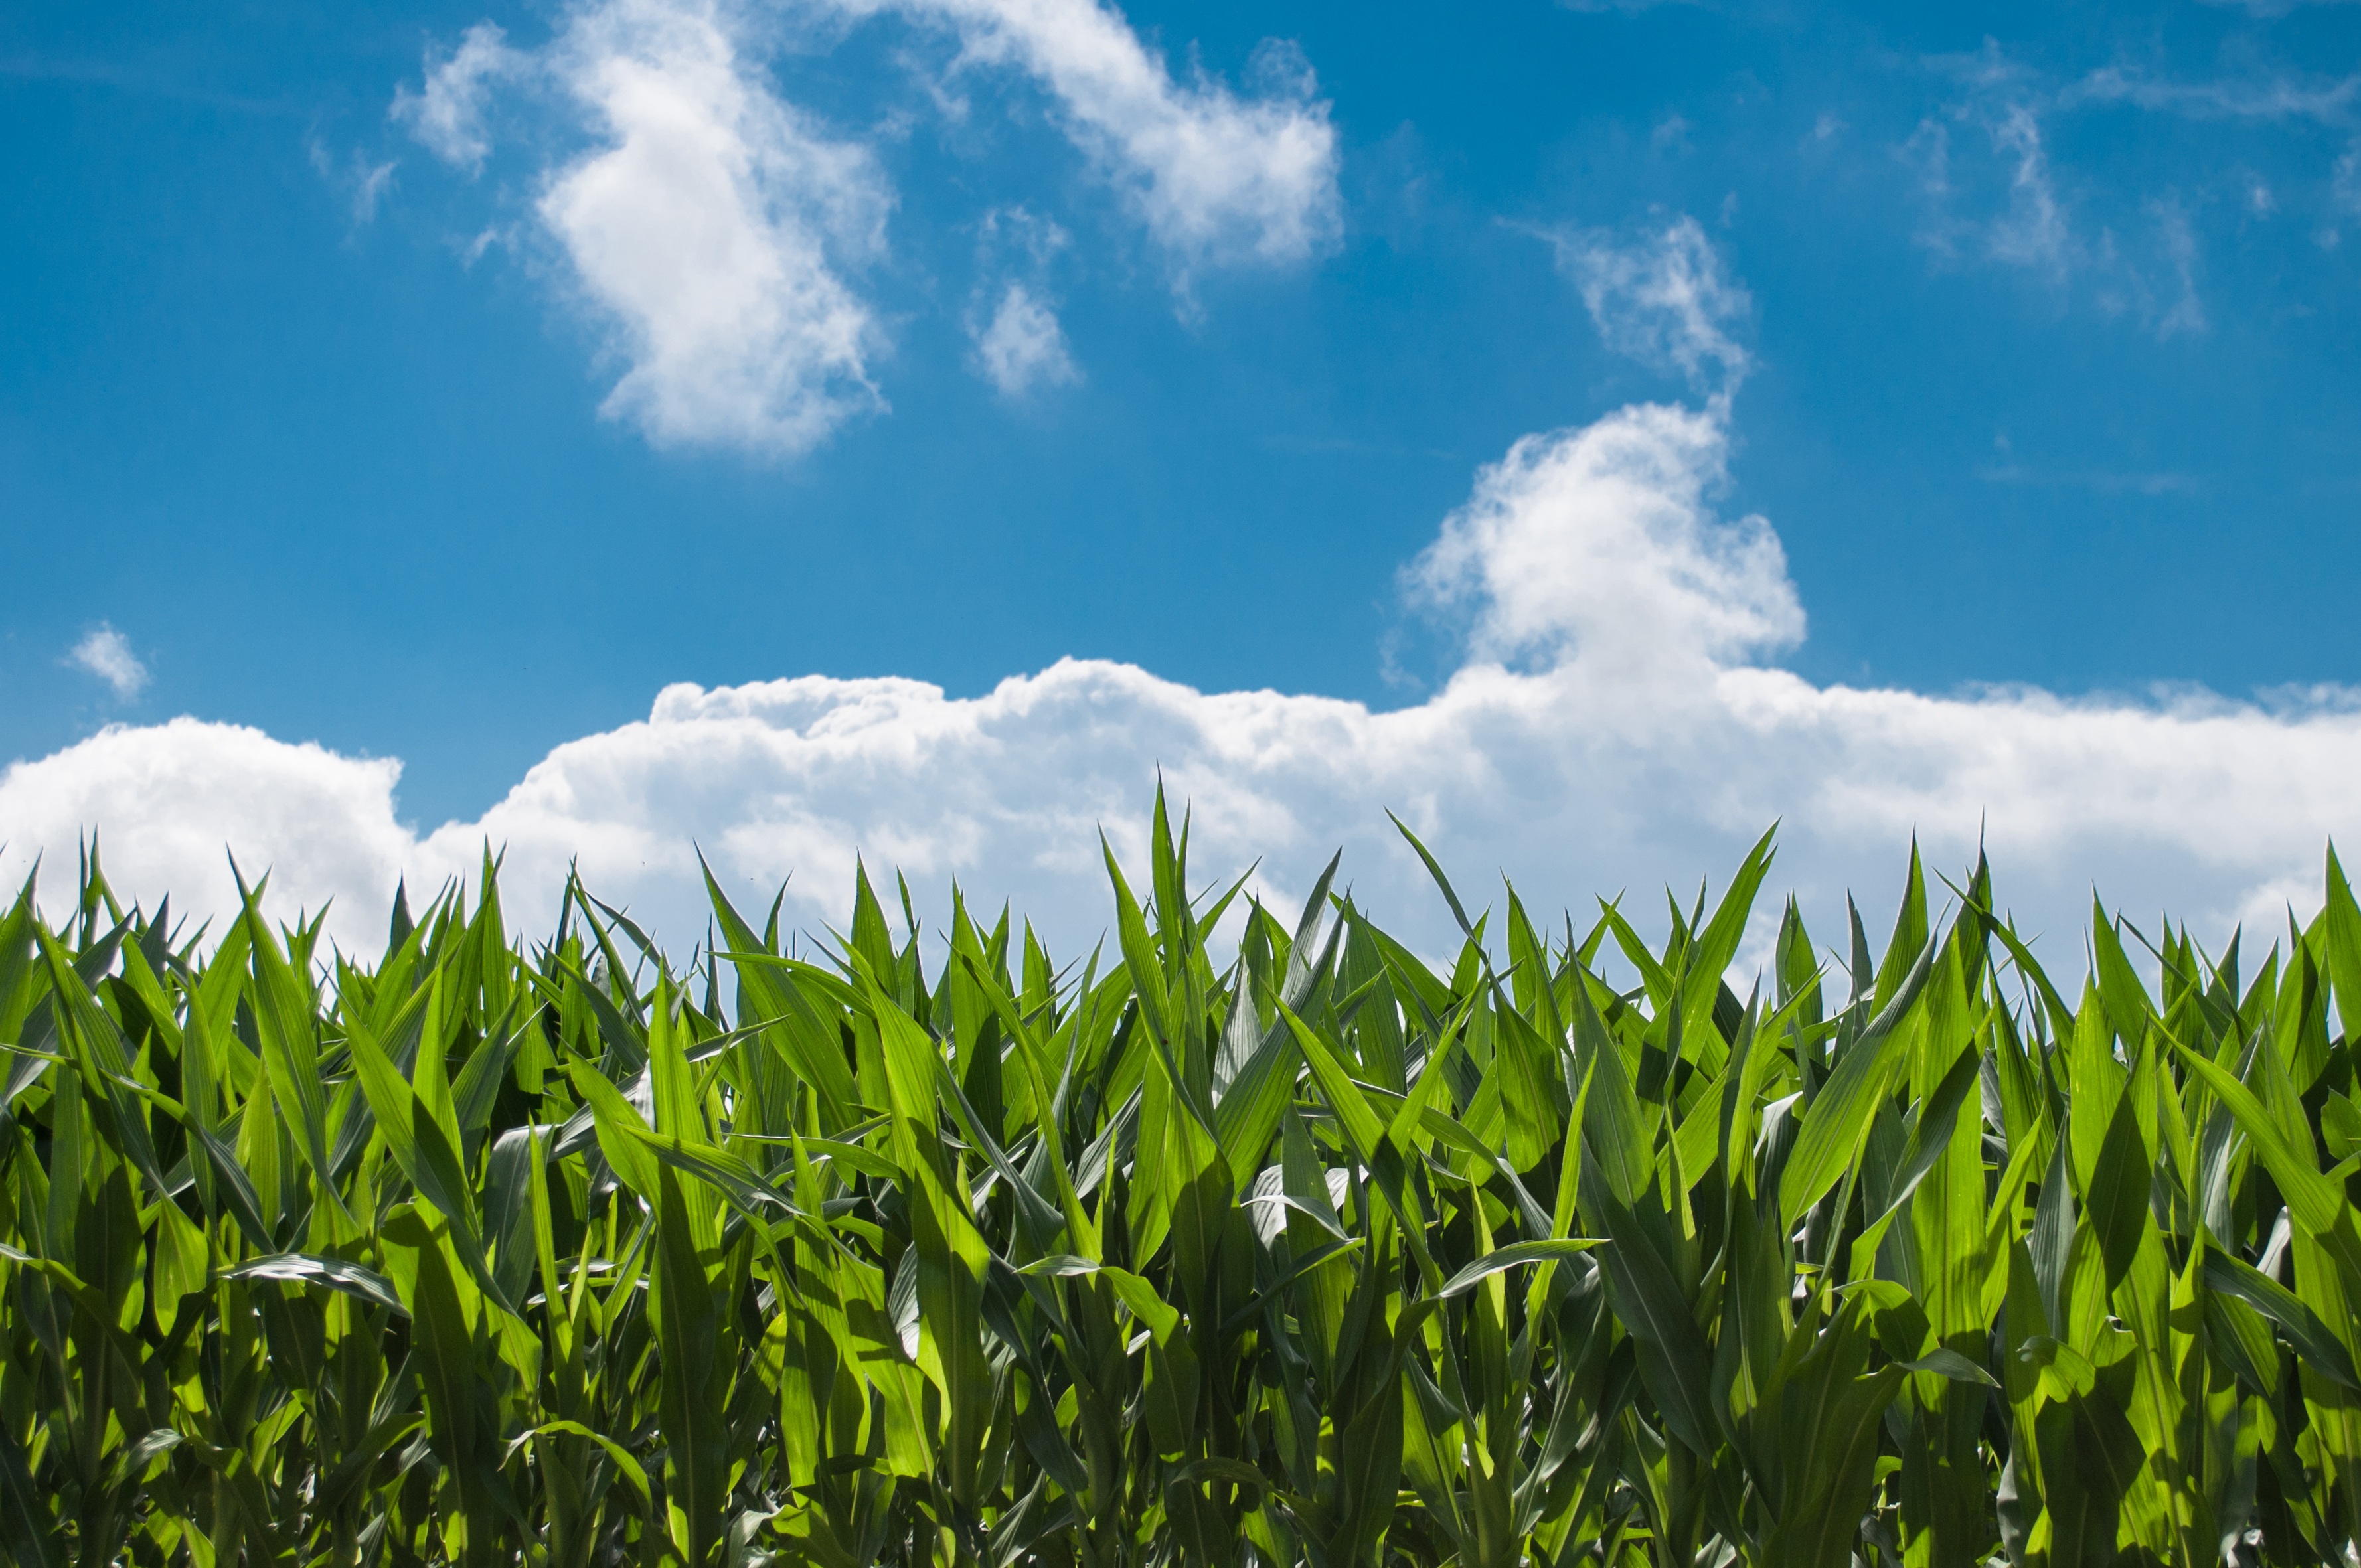 Corn rows with a blue sky